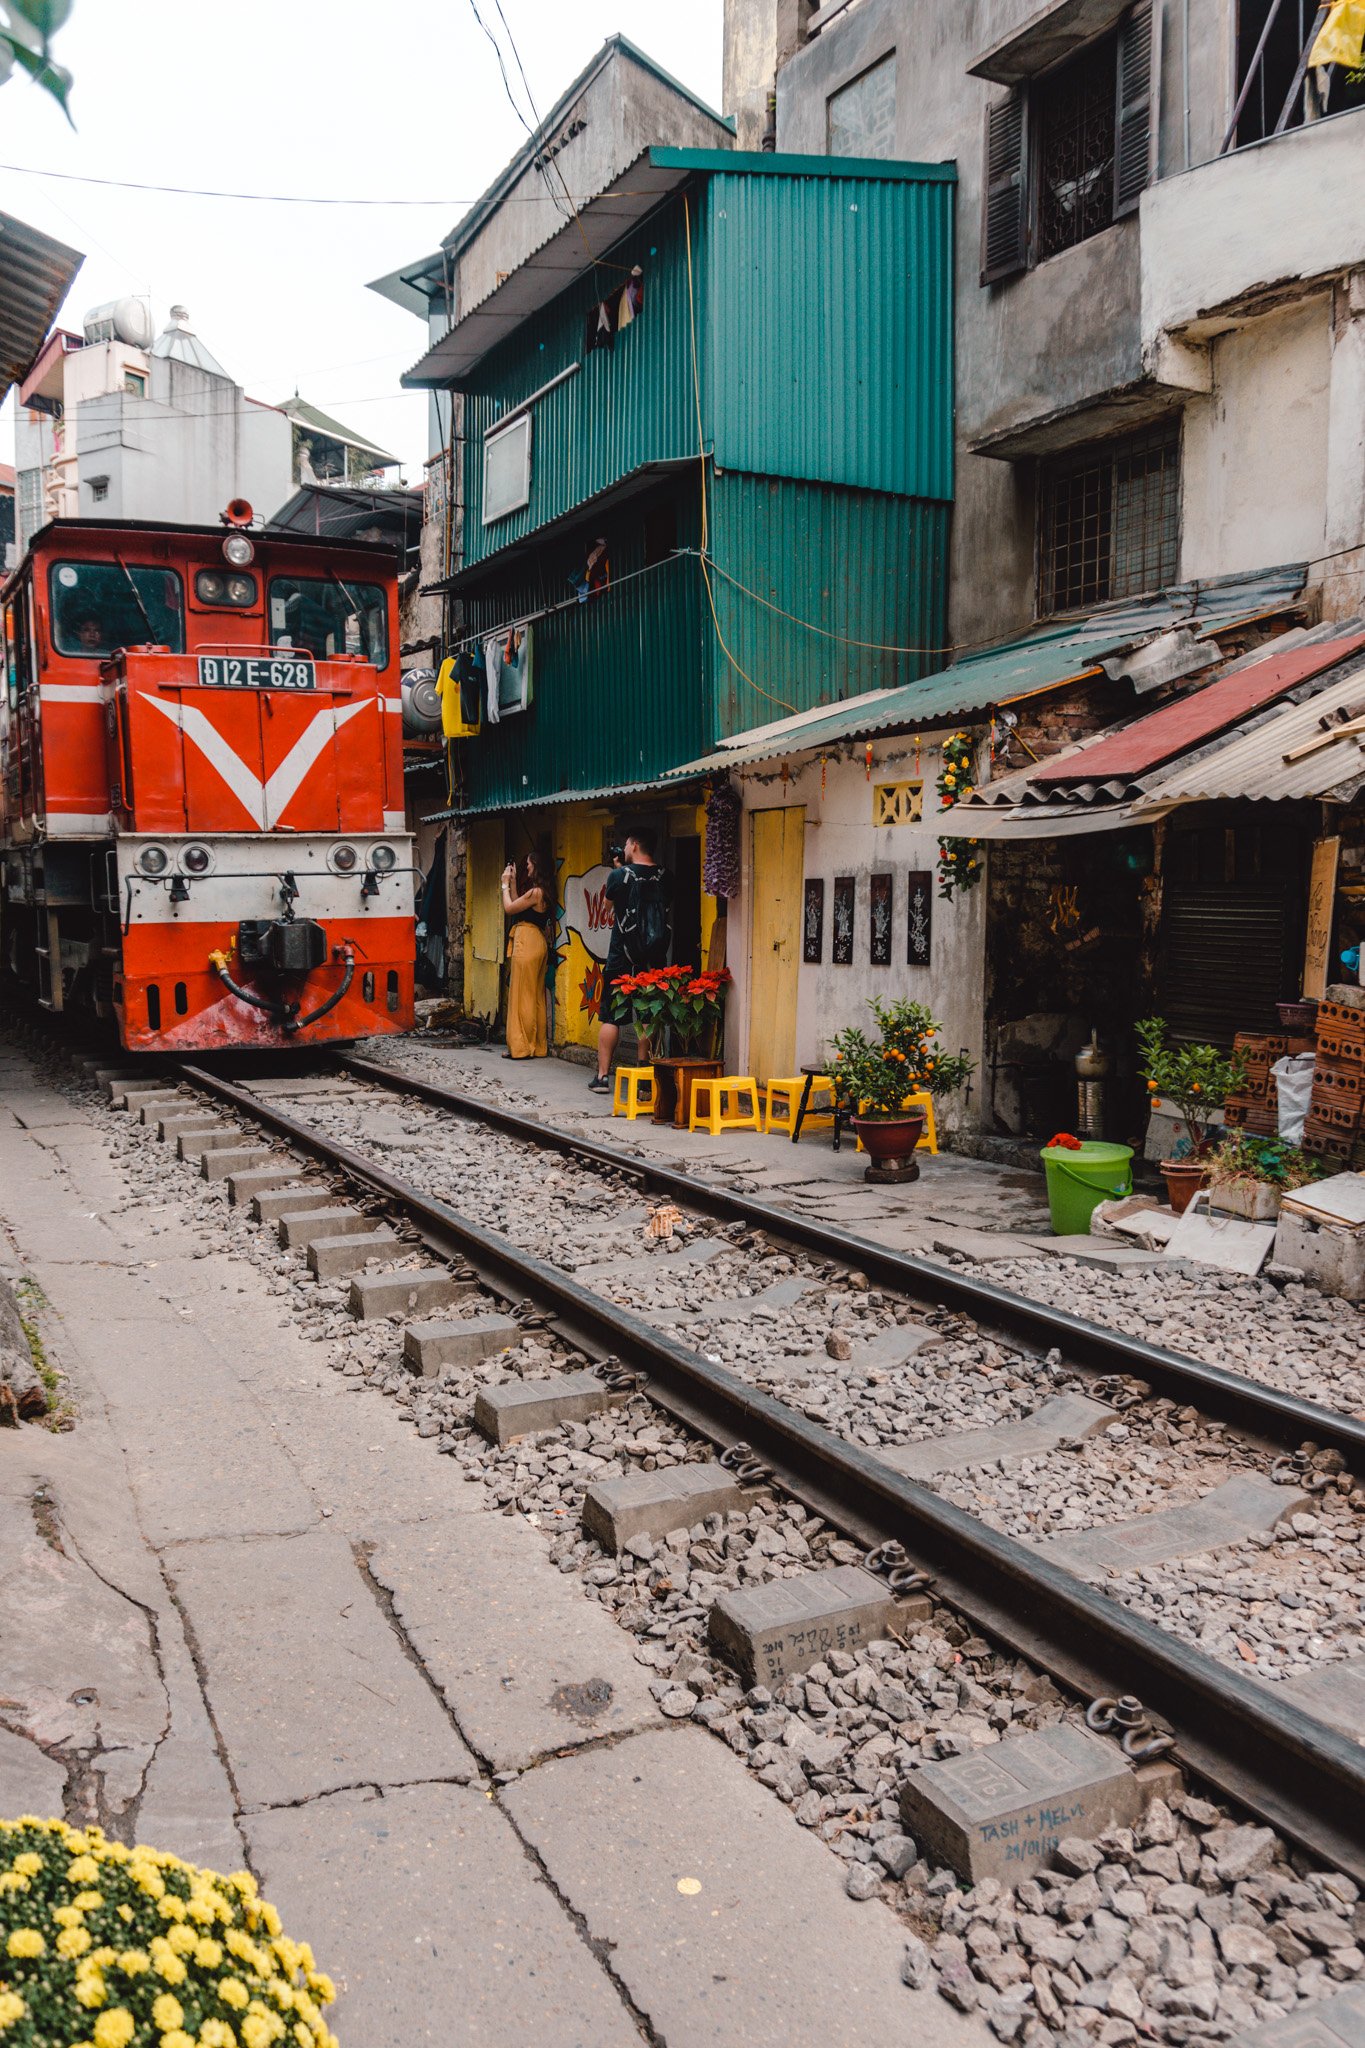 the train passing along Train Street, Hanoi, Vietnam